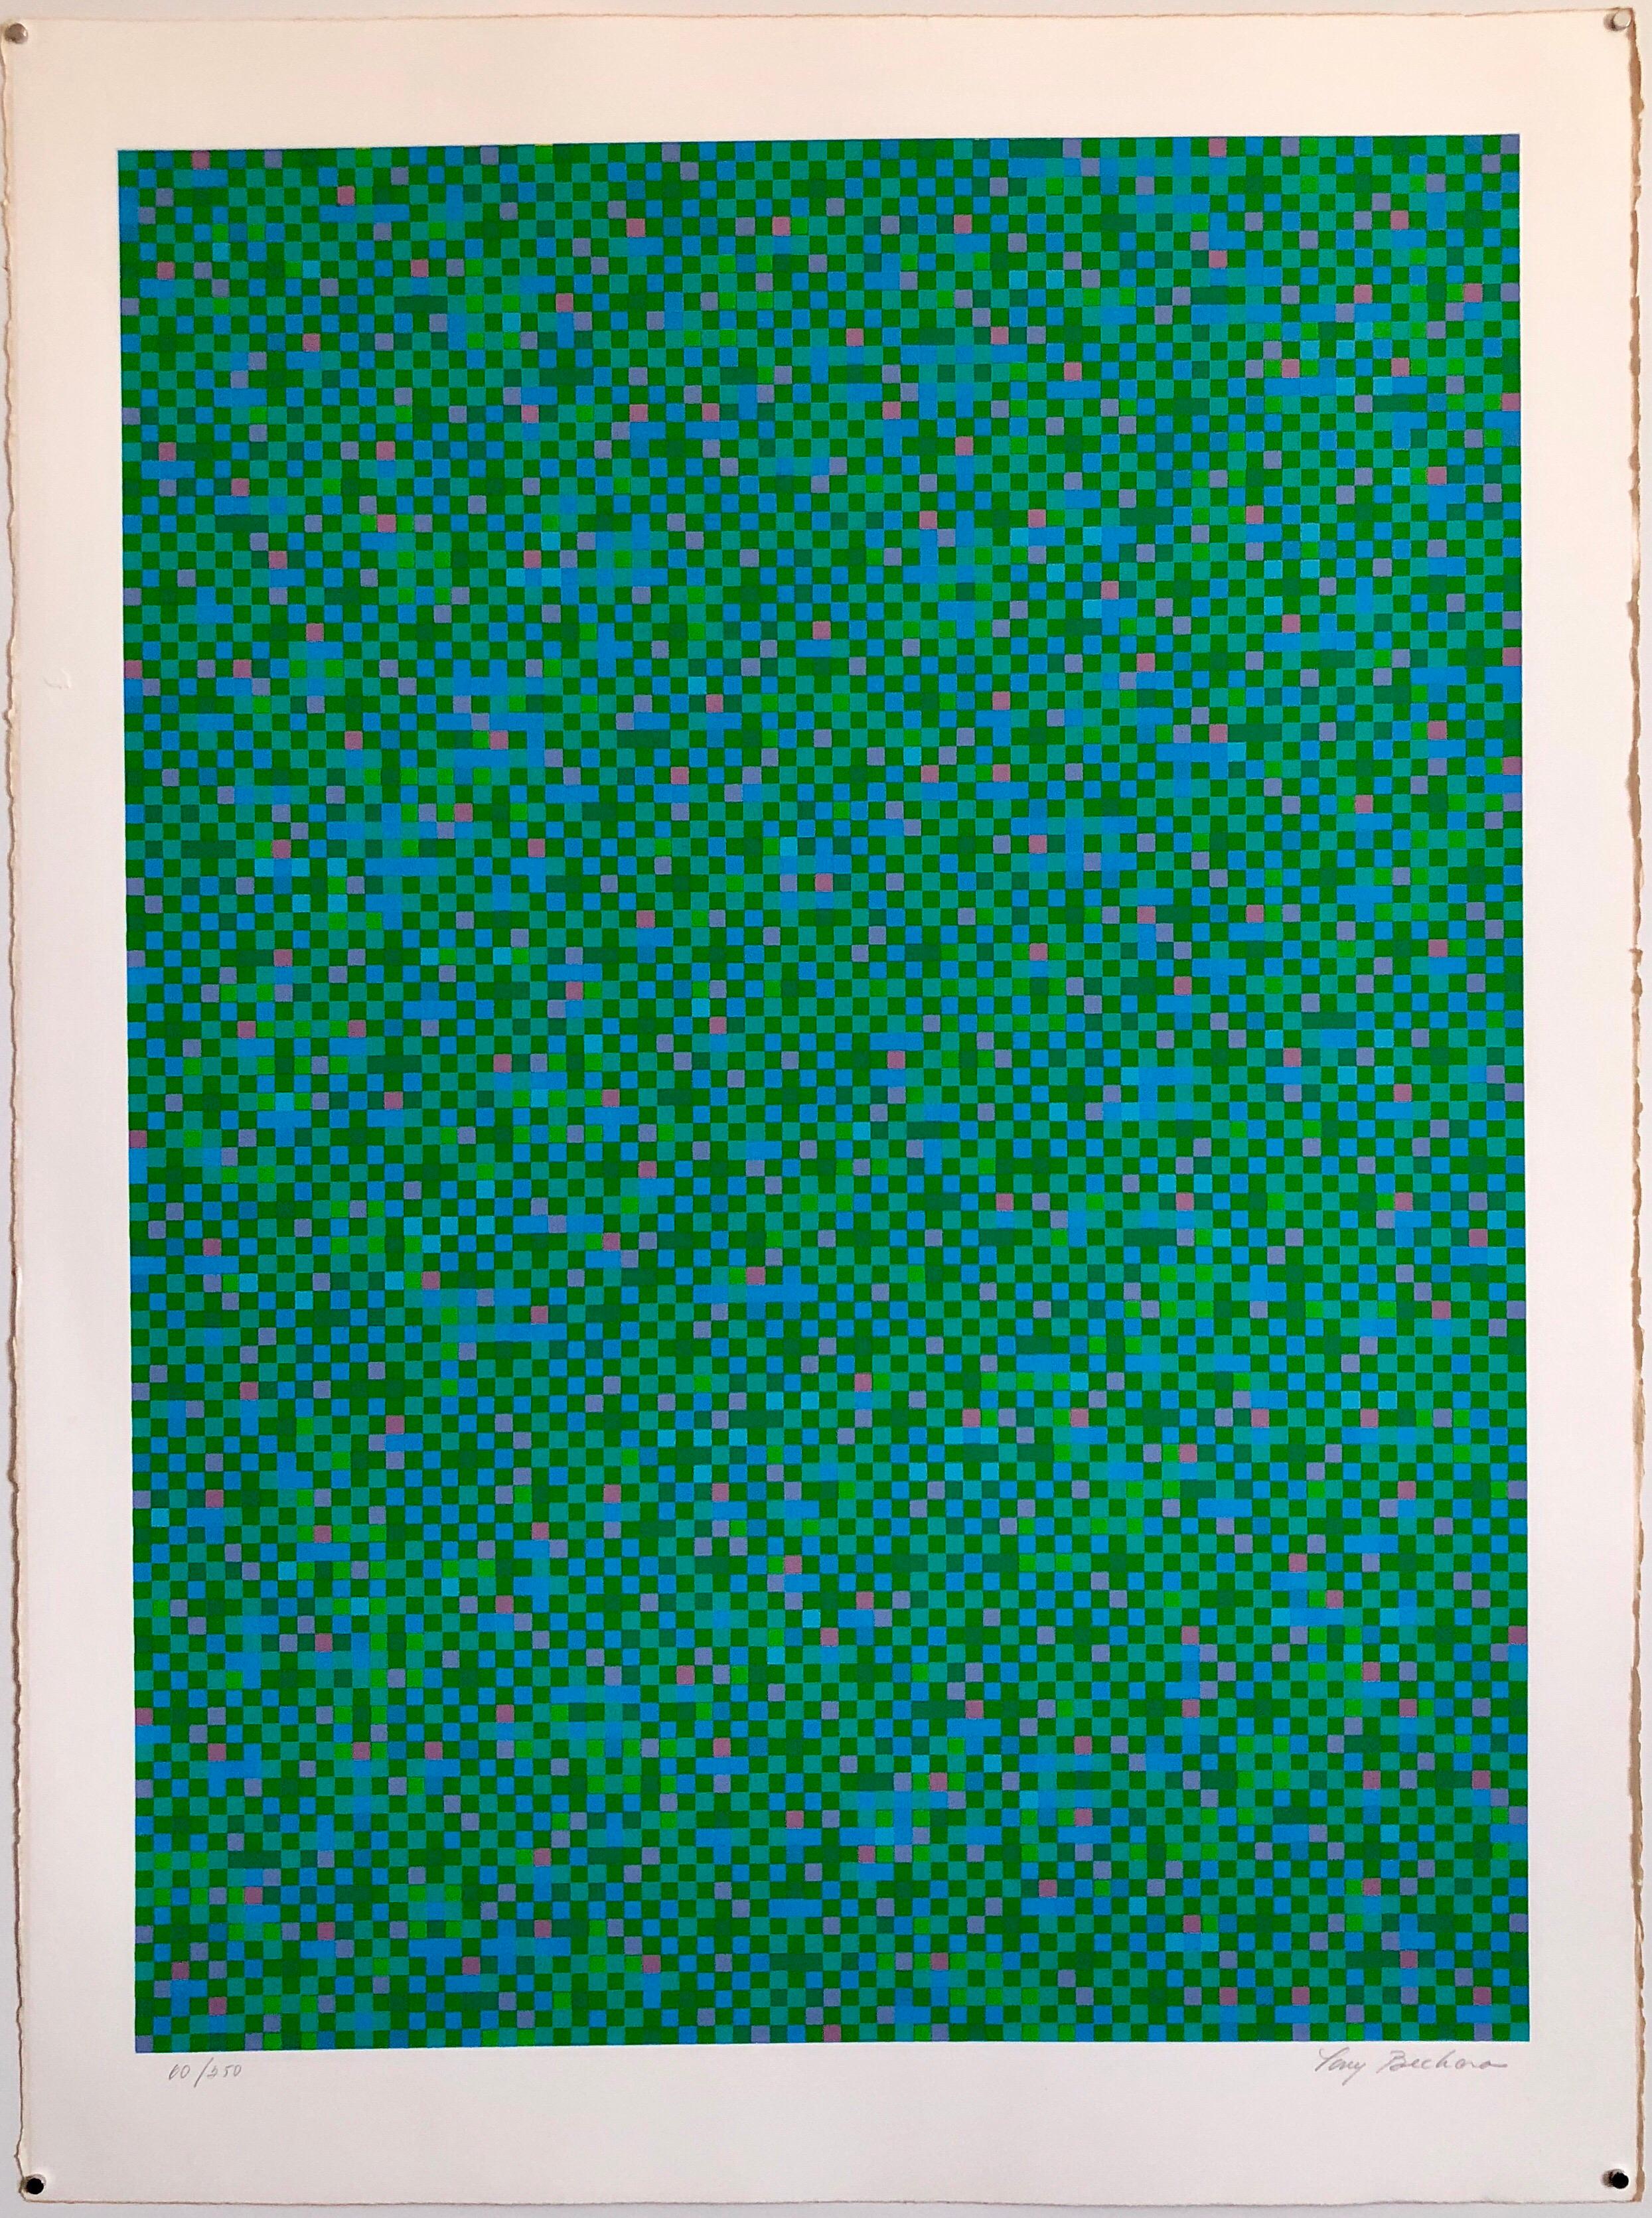 Puerto Rican Abstract Geometric Op Art Silkscreen Lithograph Kinetic Art - Print by Tony Bechara